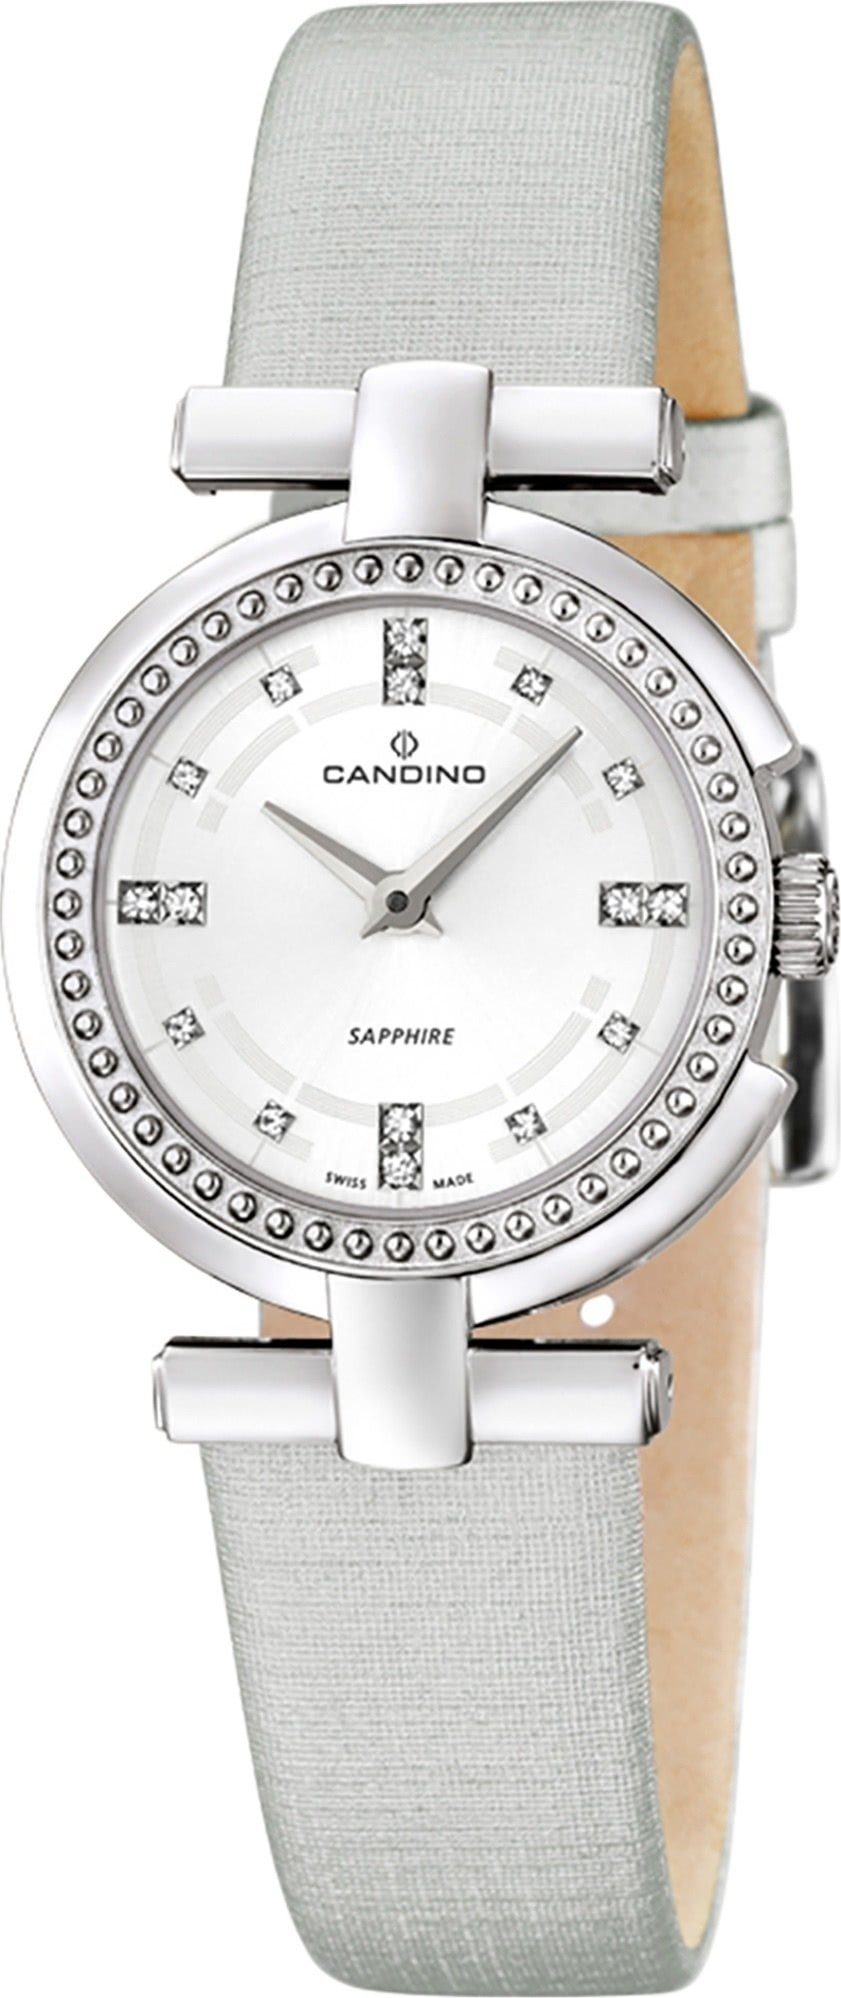 Damen Uhren Candino Quarzuhr UC4560/1 Candino Damen Uhr Analog C4560/1, Damen Armbanduhr rund, Leder/Textilarmband grau, Fashion